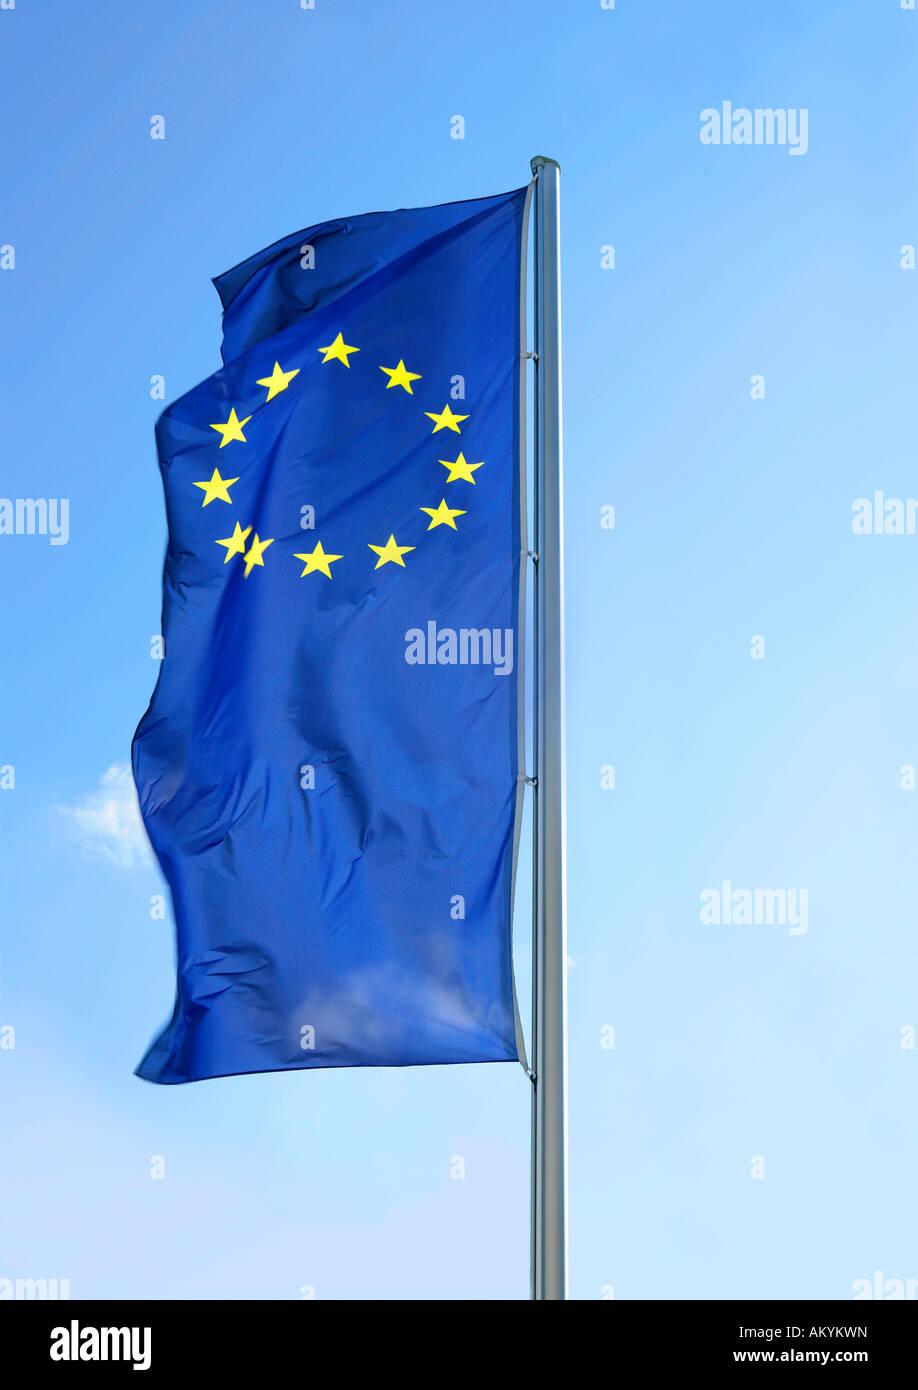 European flag waving at flag pole Stock Photo